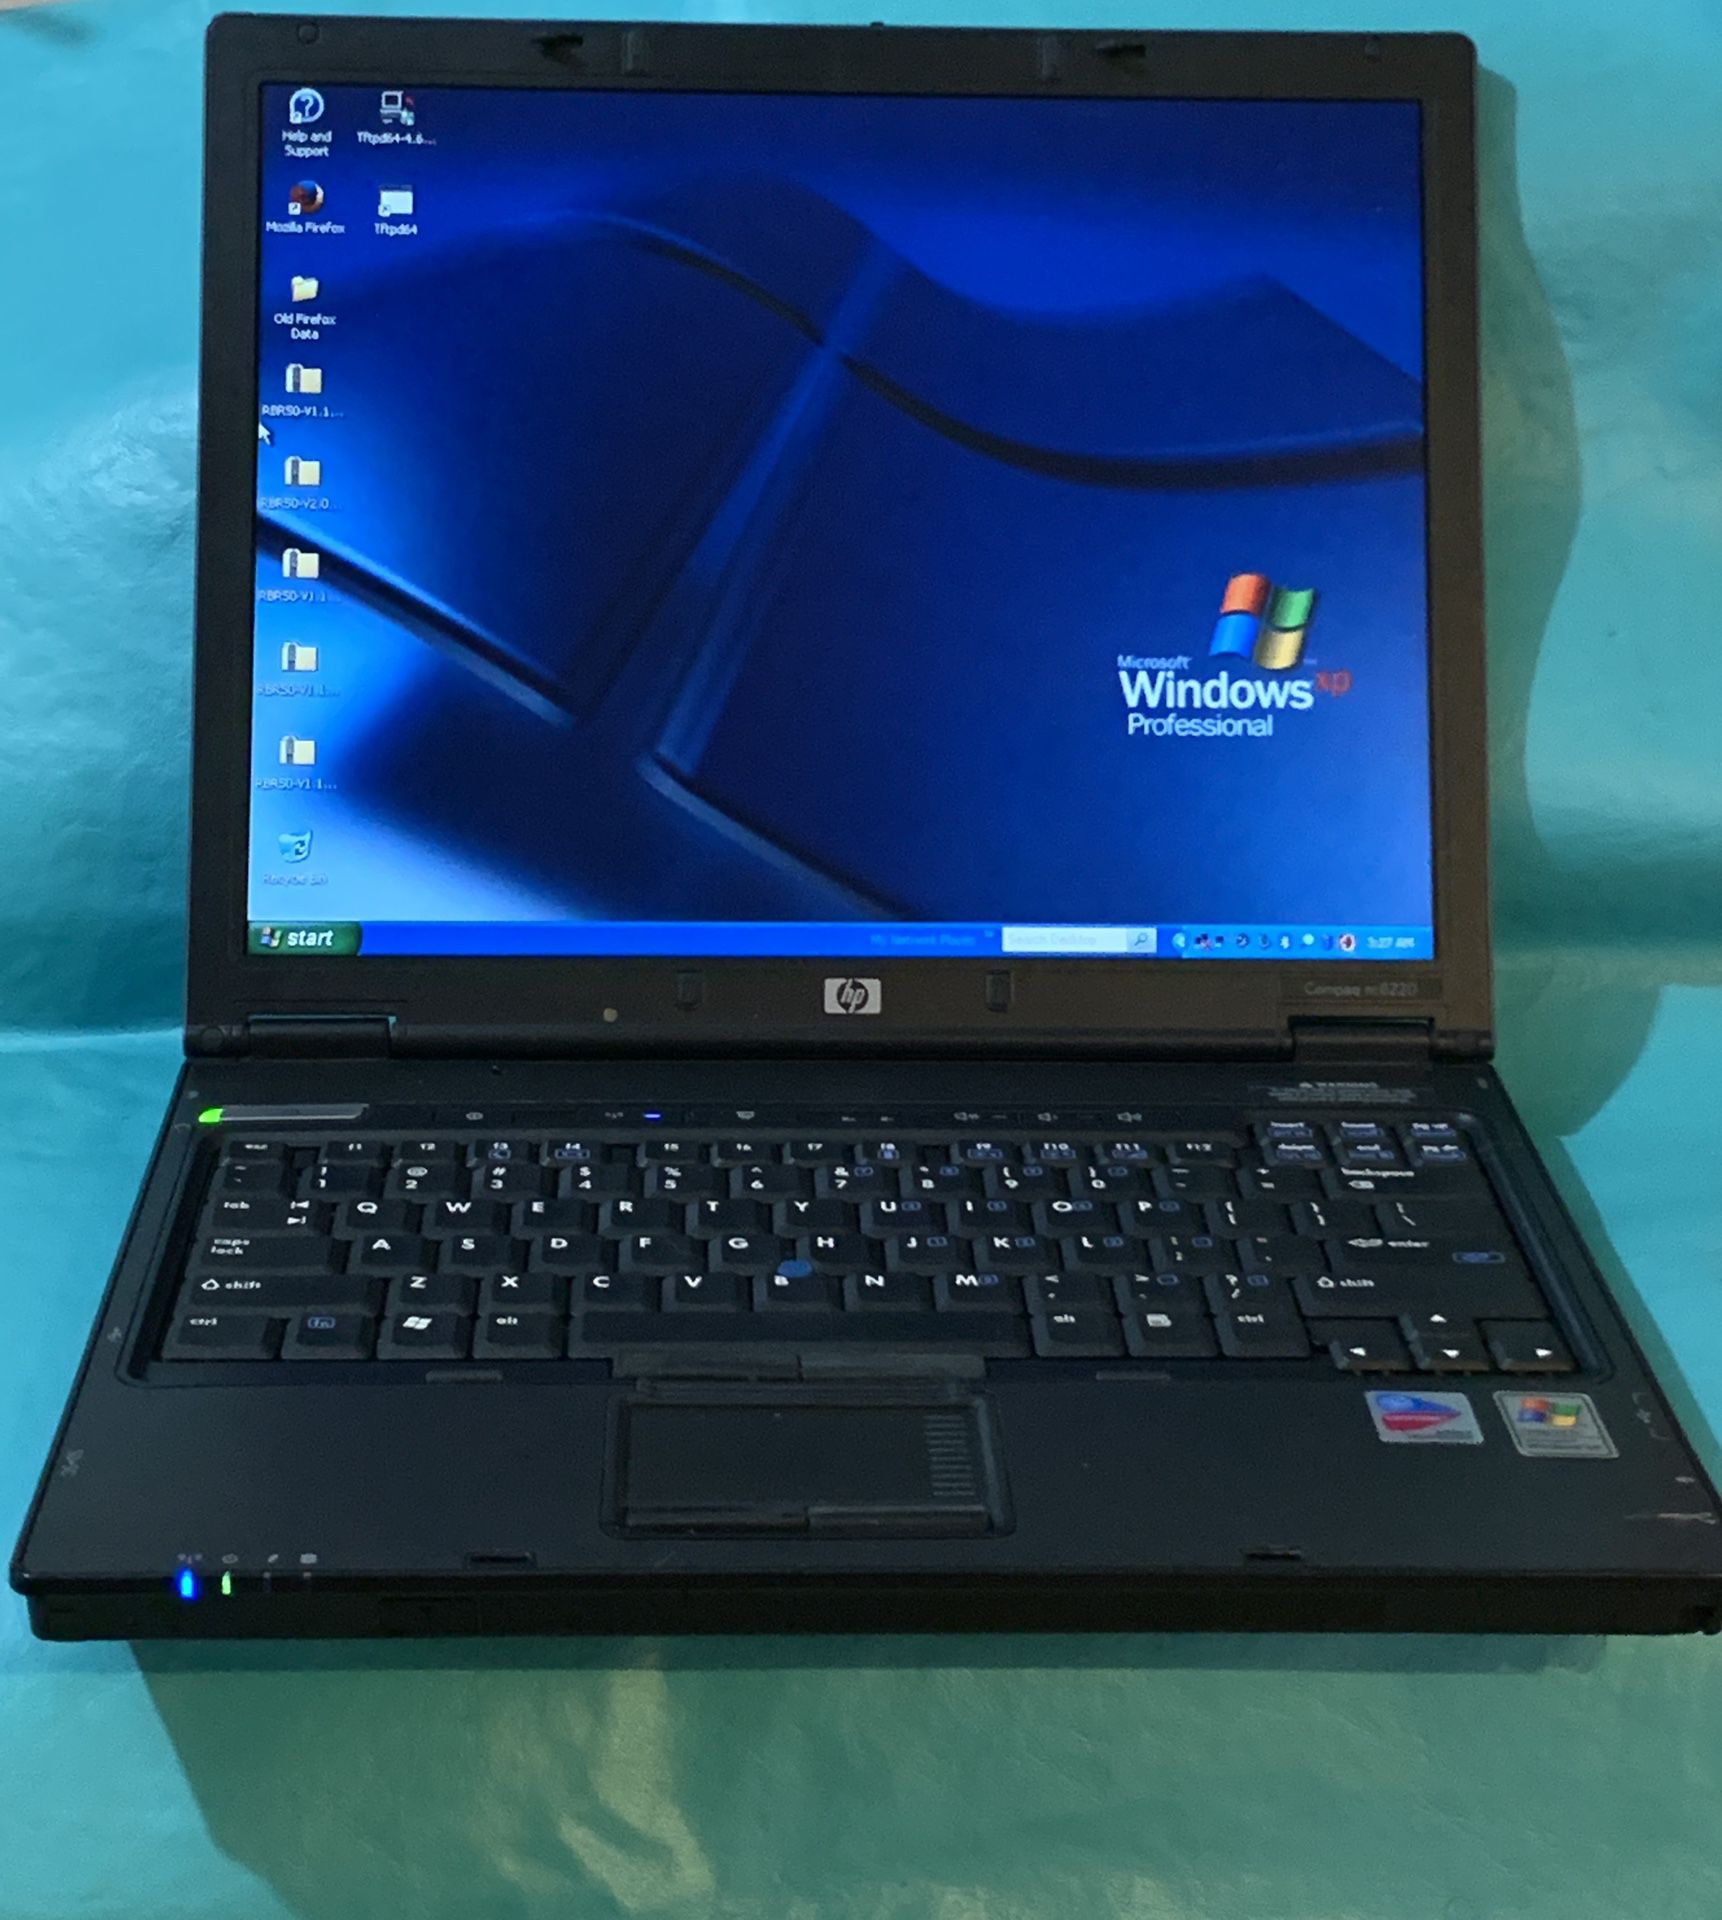 HP Compaq Business Notebook nc6220 - 14.1" - Pentium M 760 - 512 MB RAM - 80 GB HDD